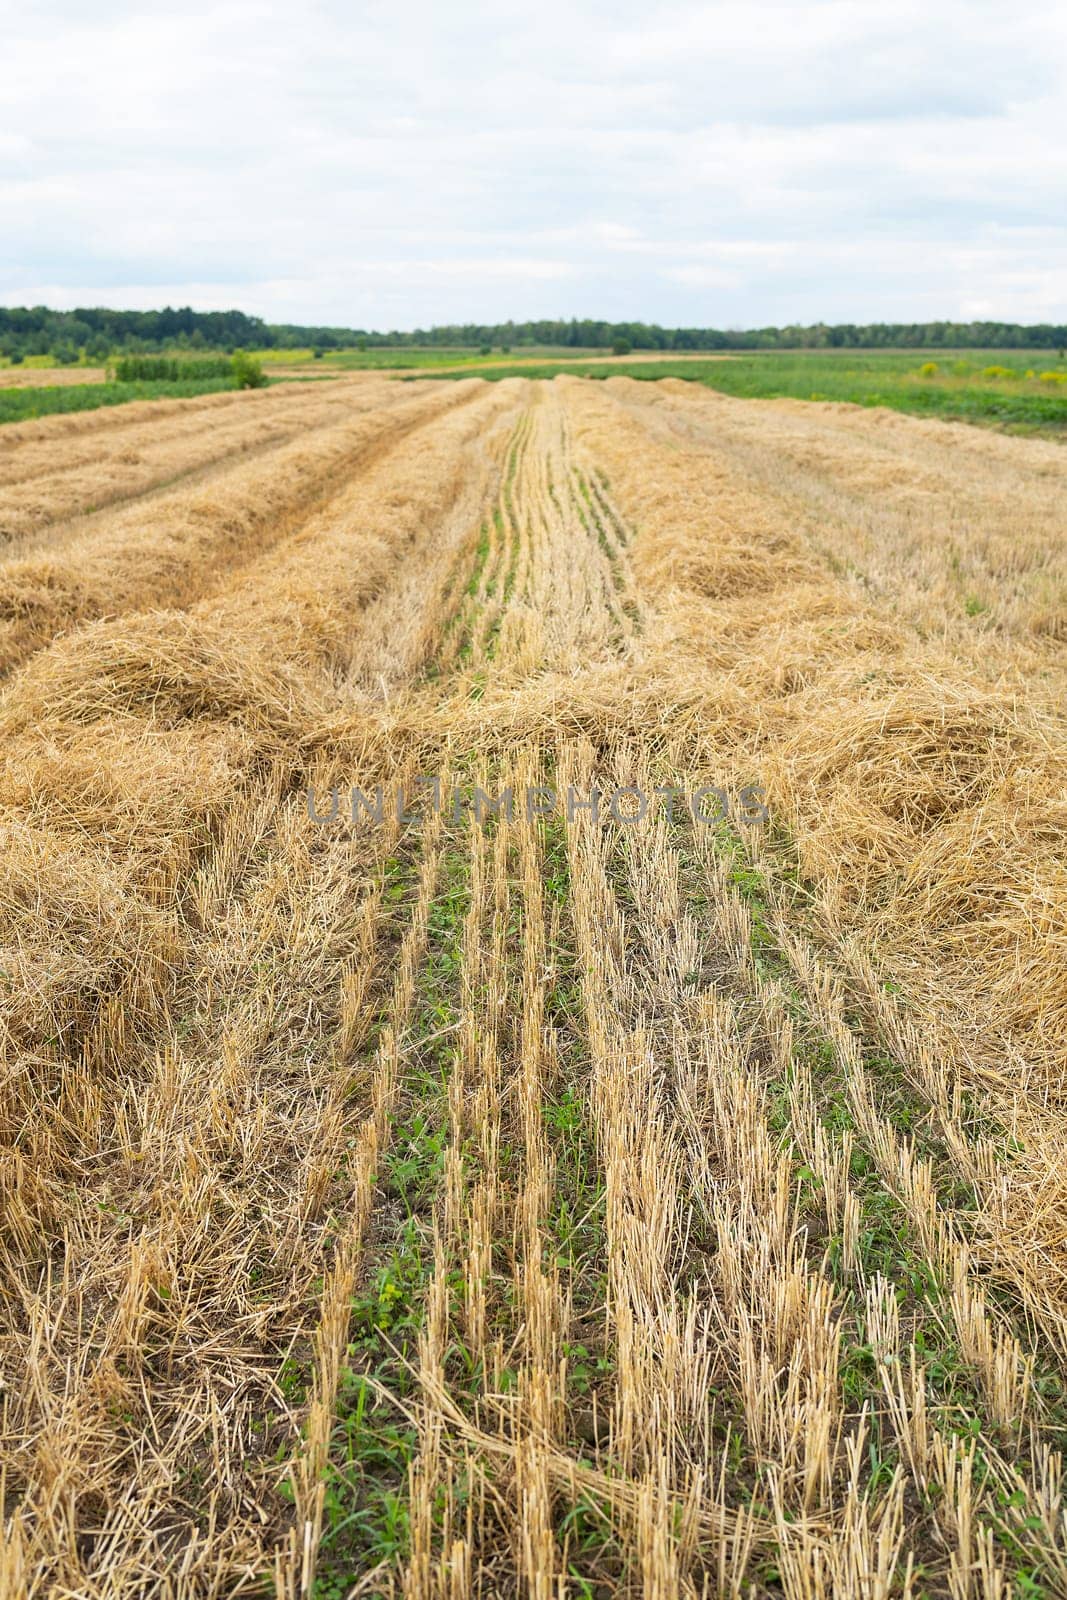 wheat field after harvest, mowed field, empty field with straw after harvest, seasonal farm work